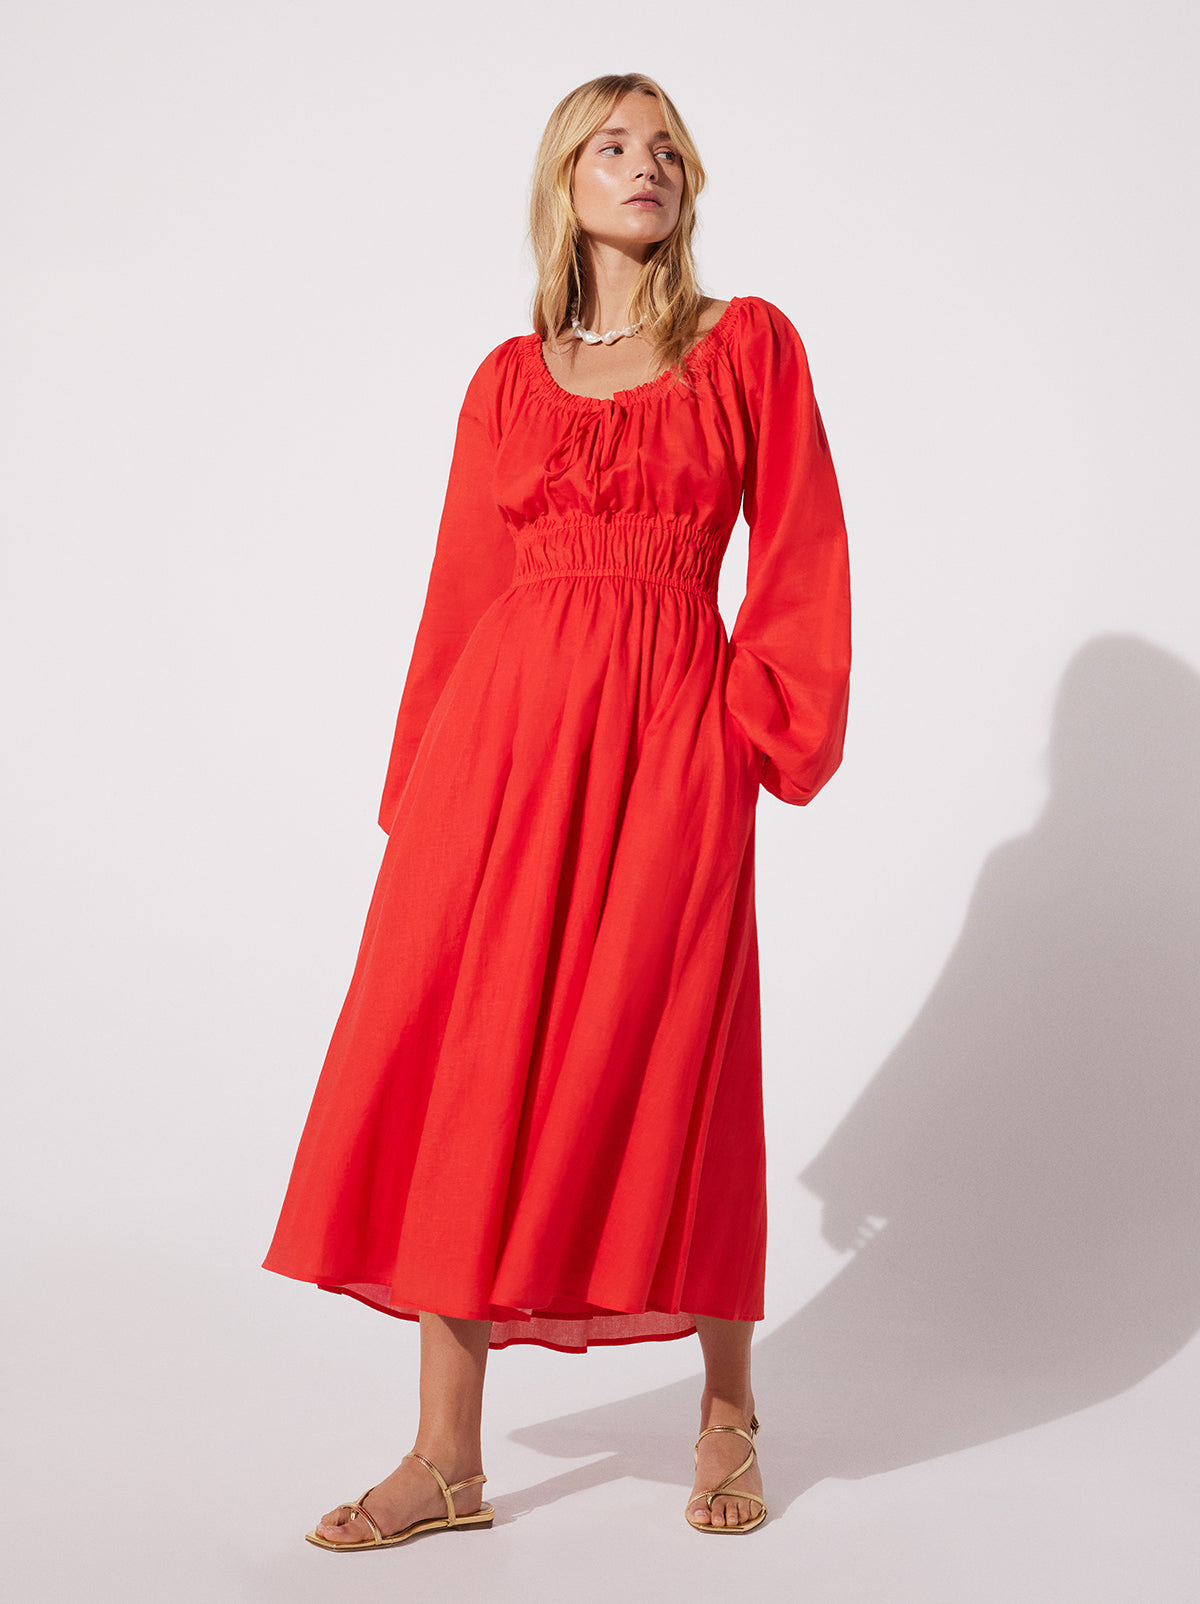 Luella Red Midi Dress By KITRI Studio